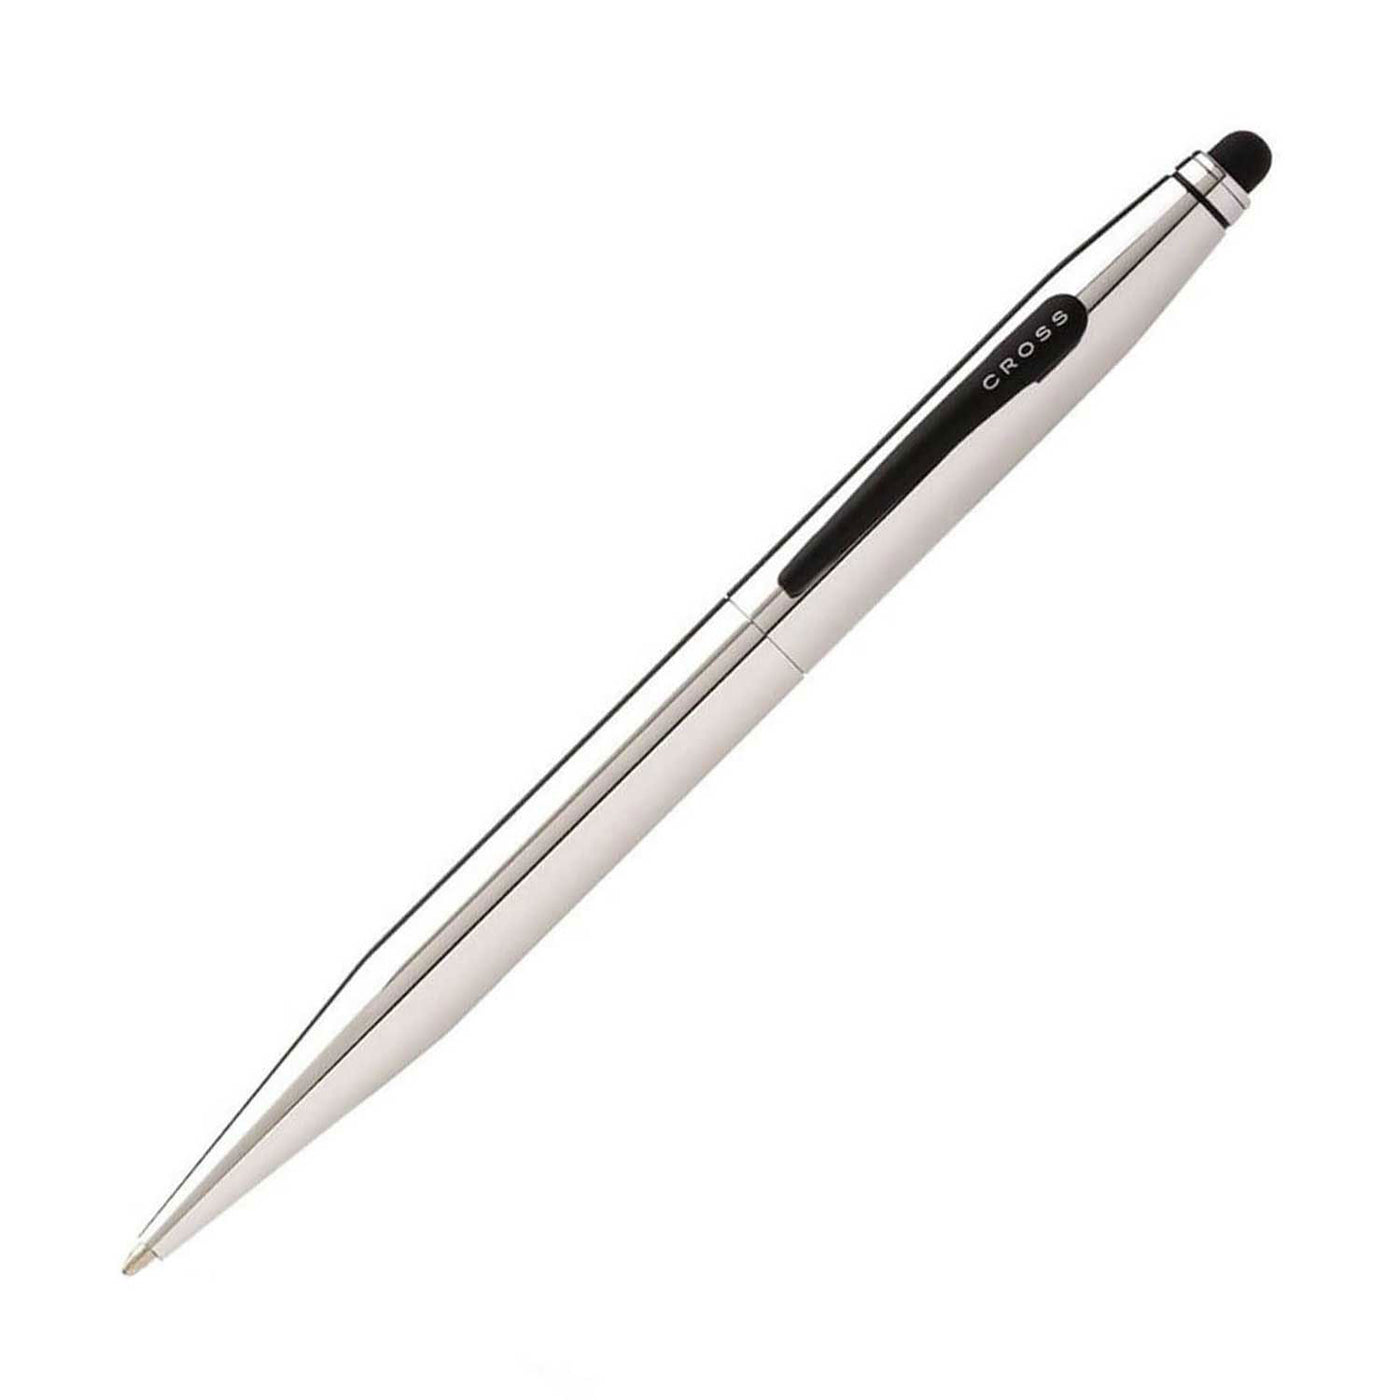 Cross Tech 2 2-In-1 Multi Function Pen With Stylus, Chrome